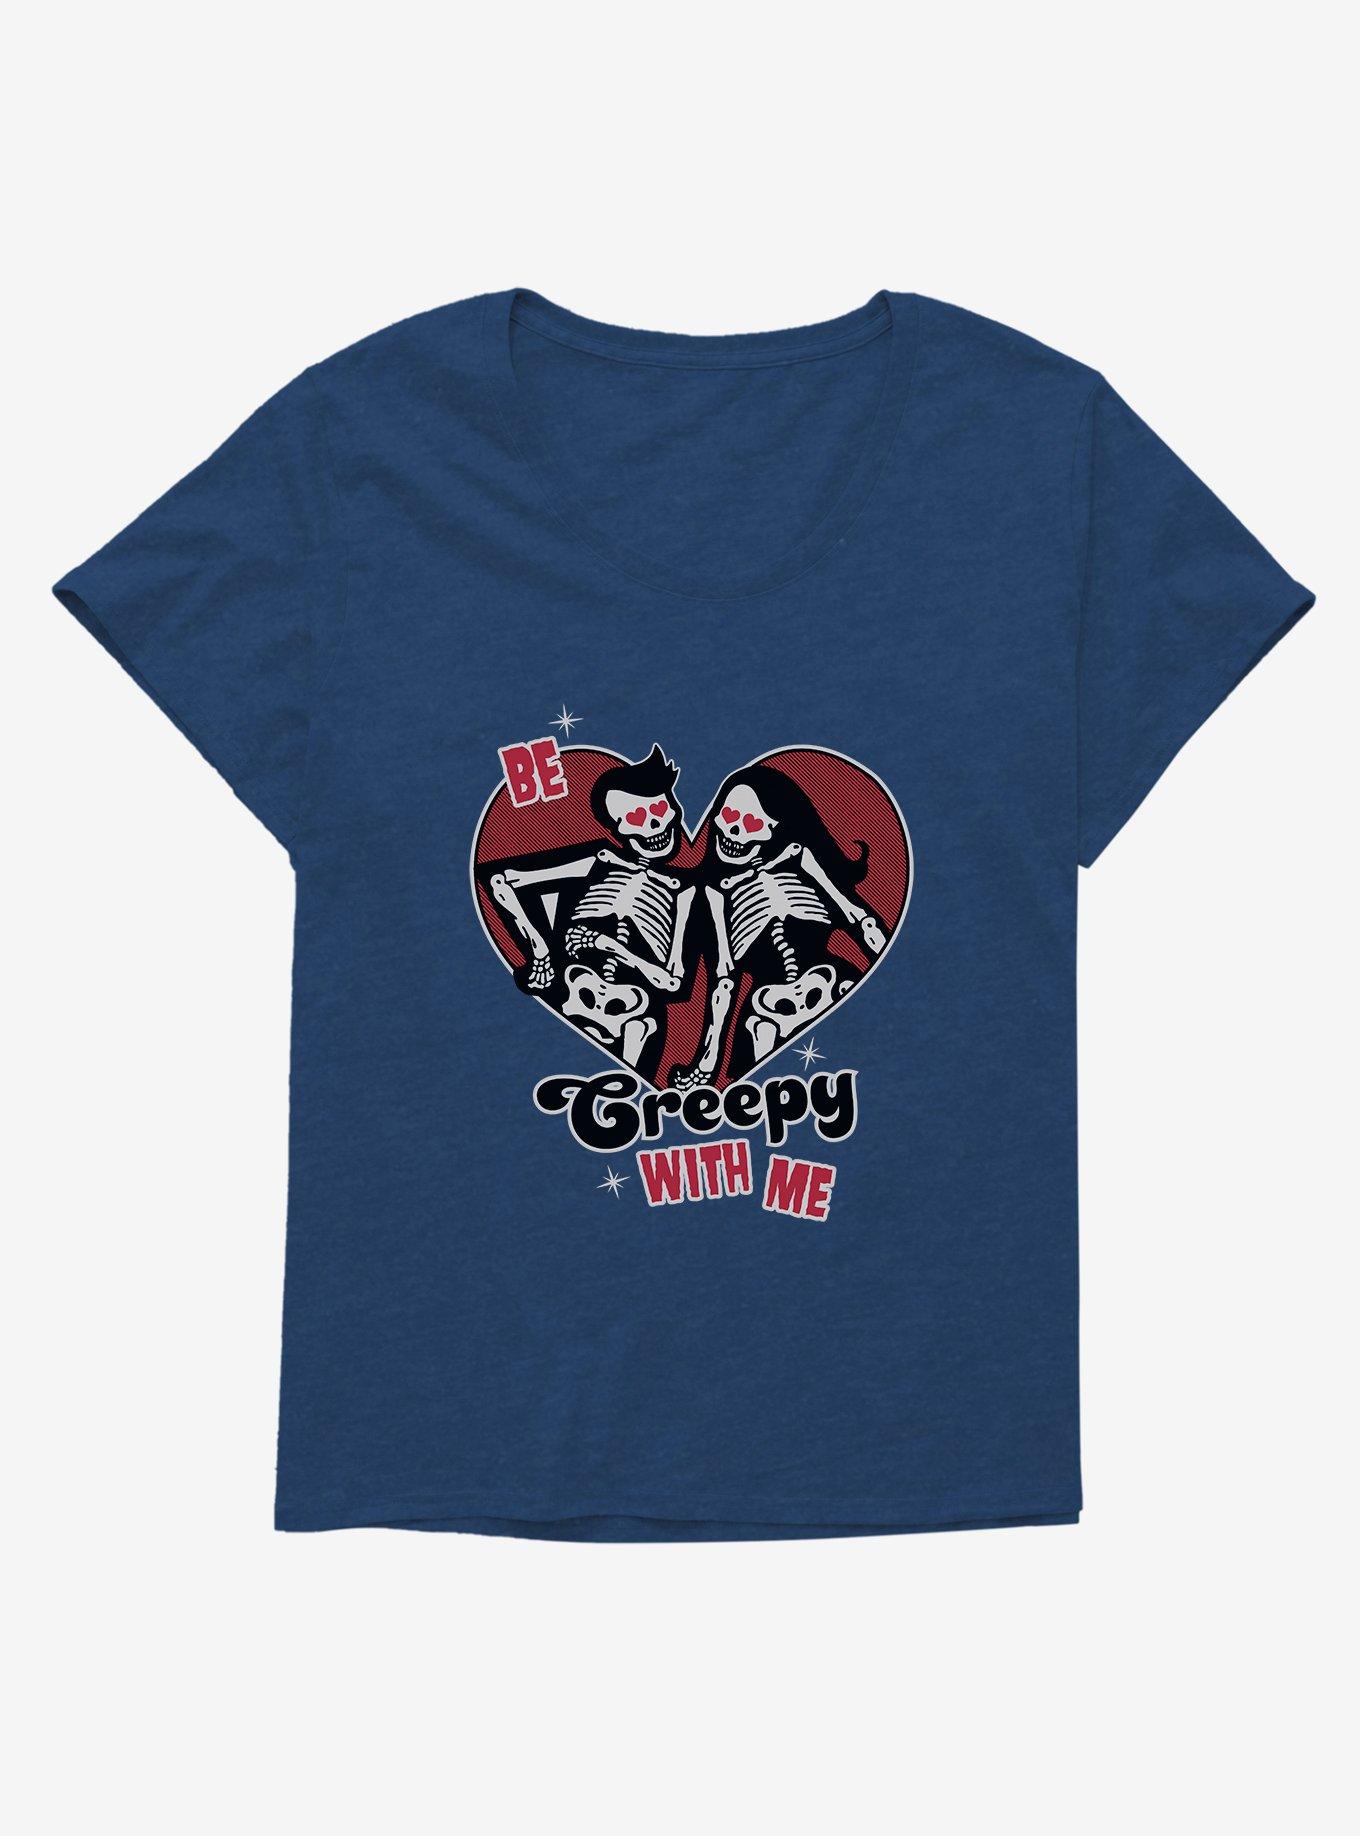 Creepy Together Girls T-Shirt Plus